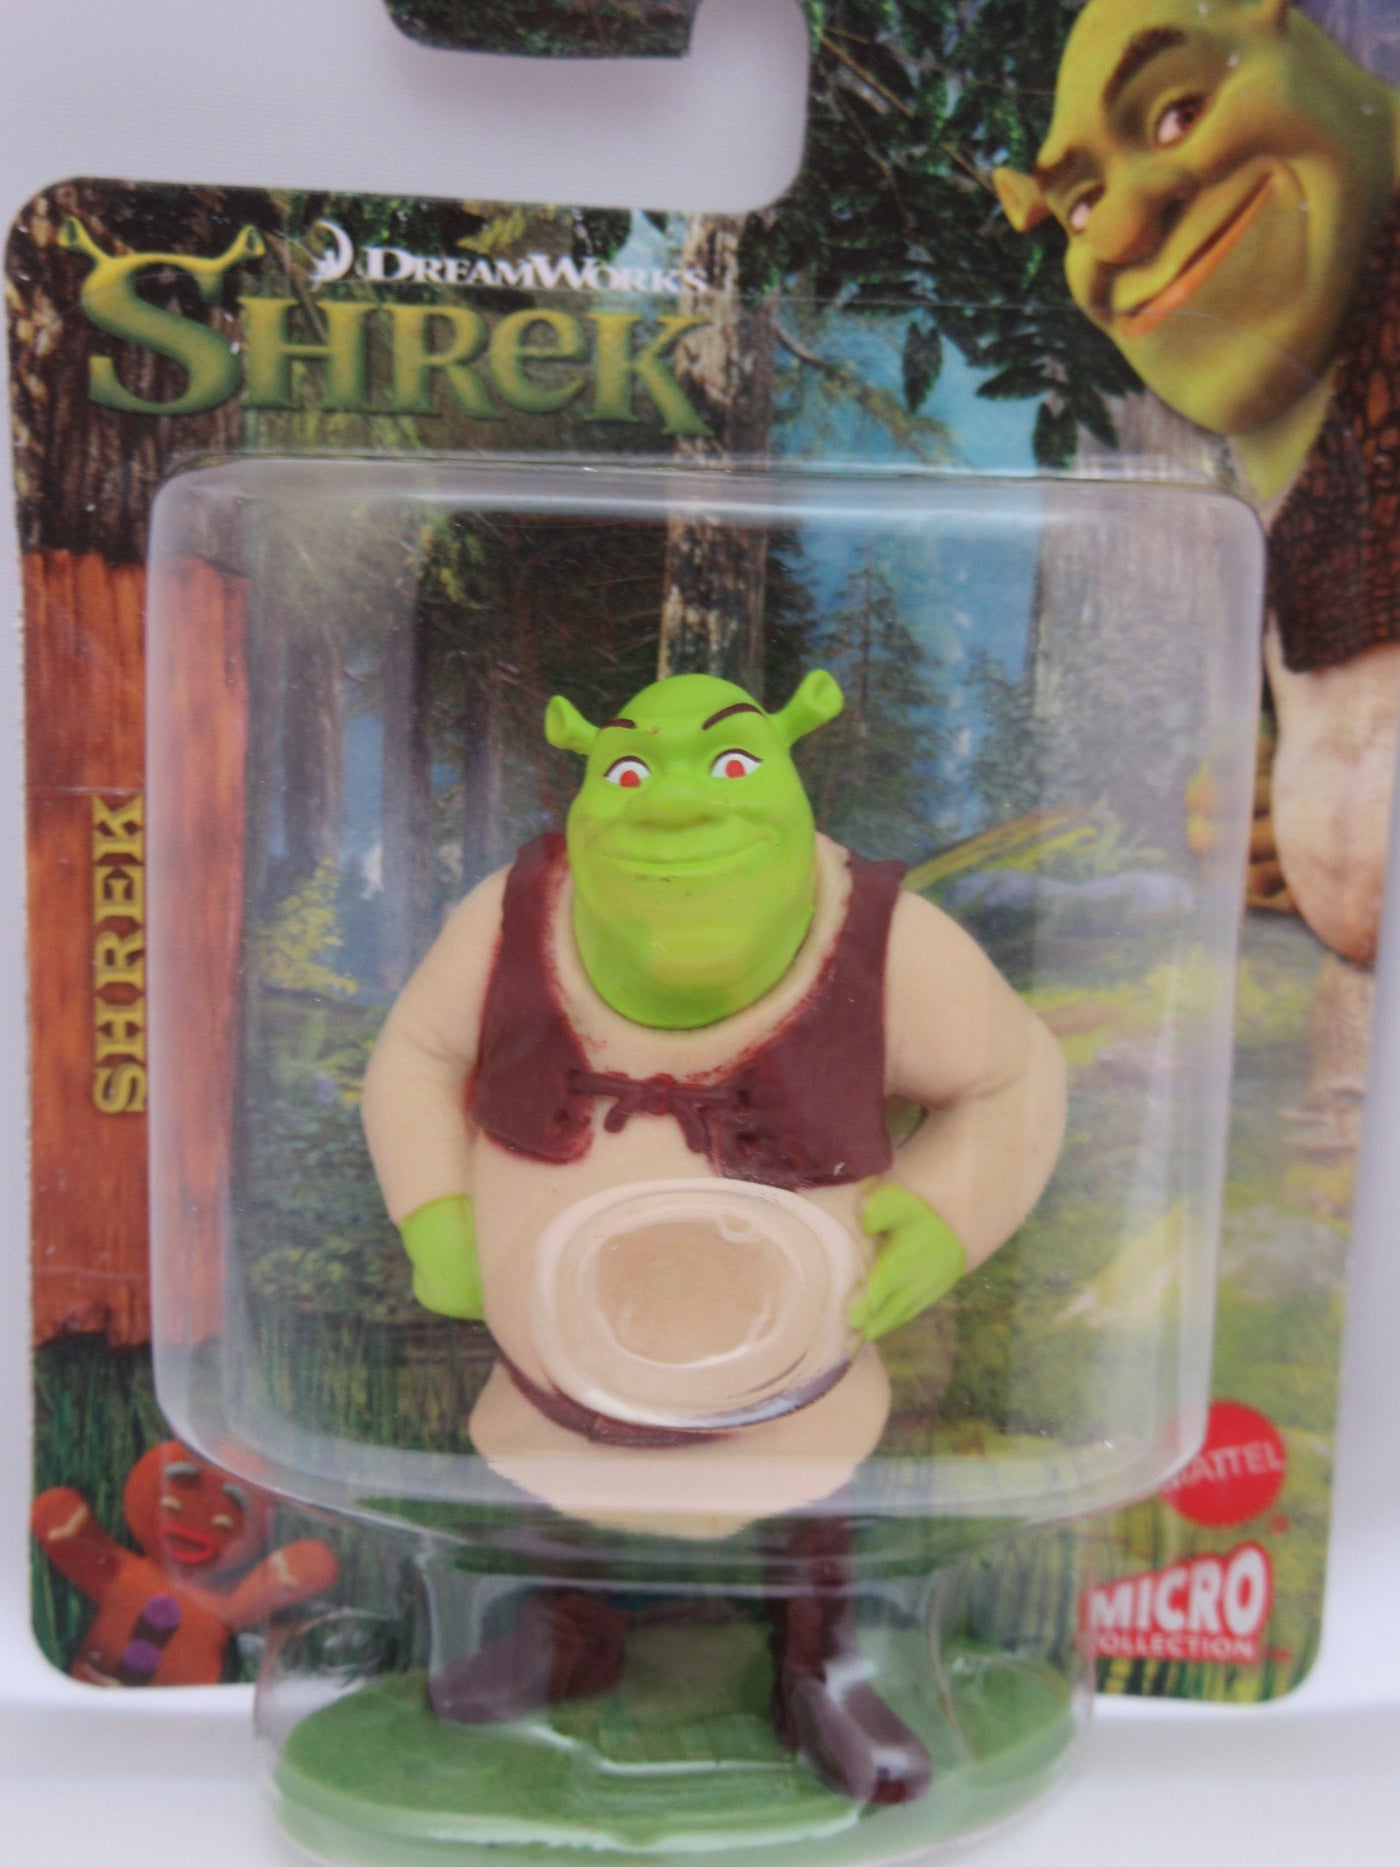 Shrek Character All 5 Figurines